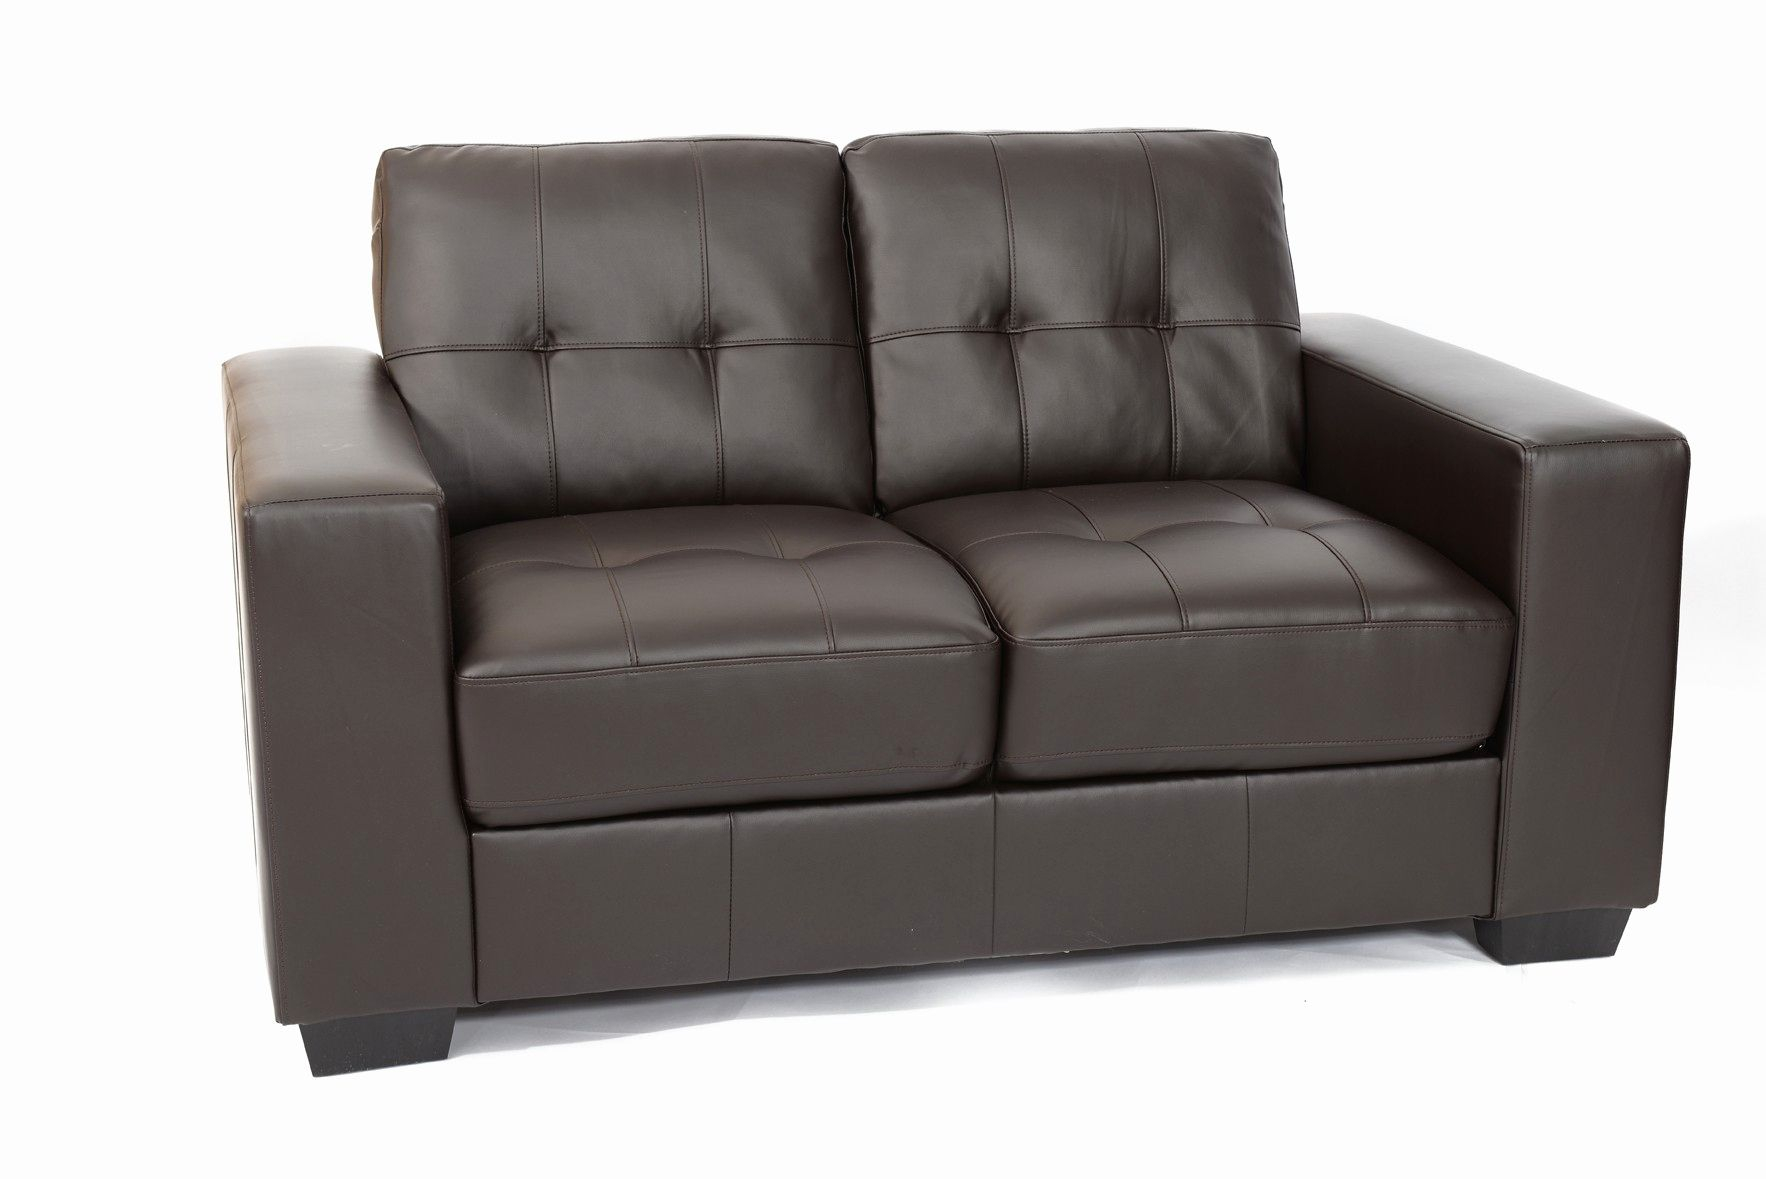 natuzzi editions naples leather sofa